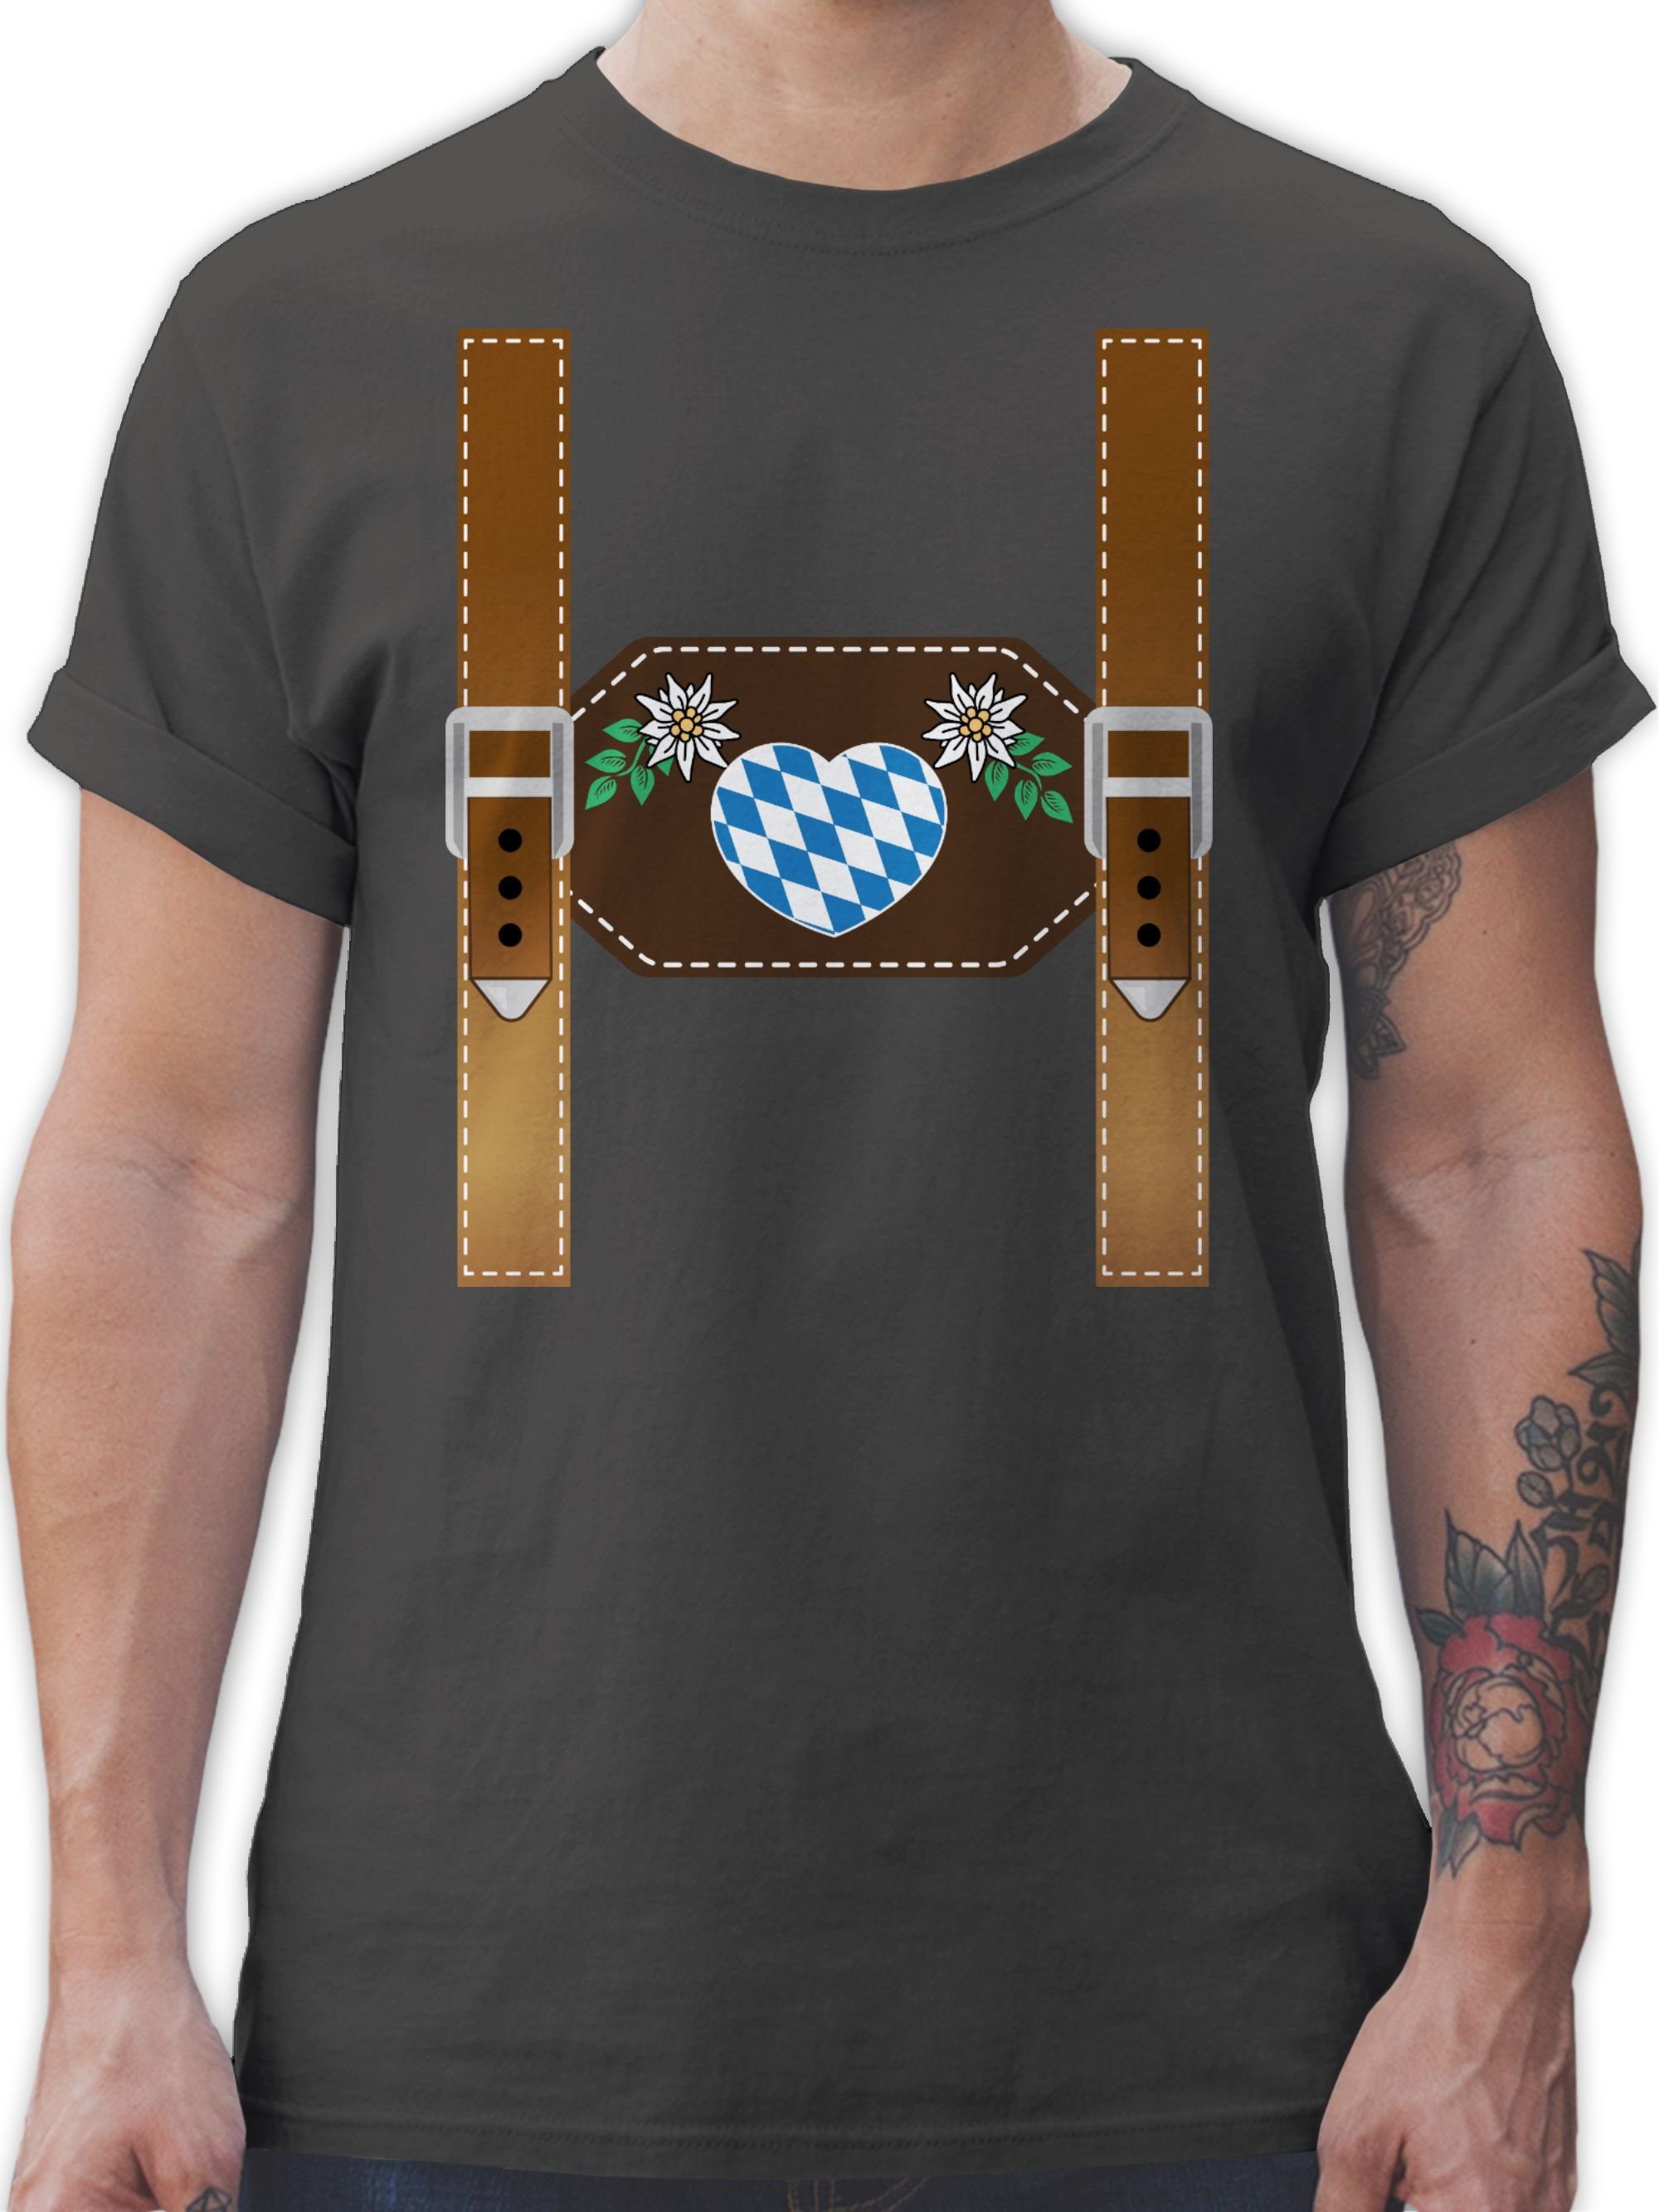 Shirtracer T-Shirt Lederhose - Herz Bayern Mode für Oktoberfest Herren 3 Dunkelgrau